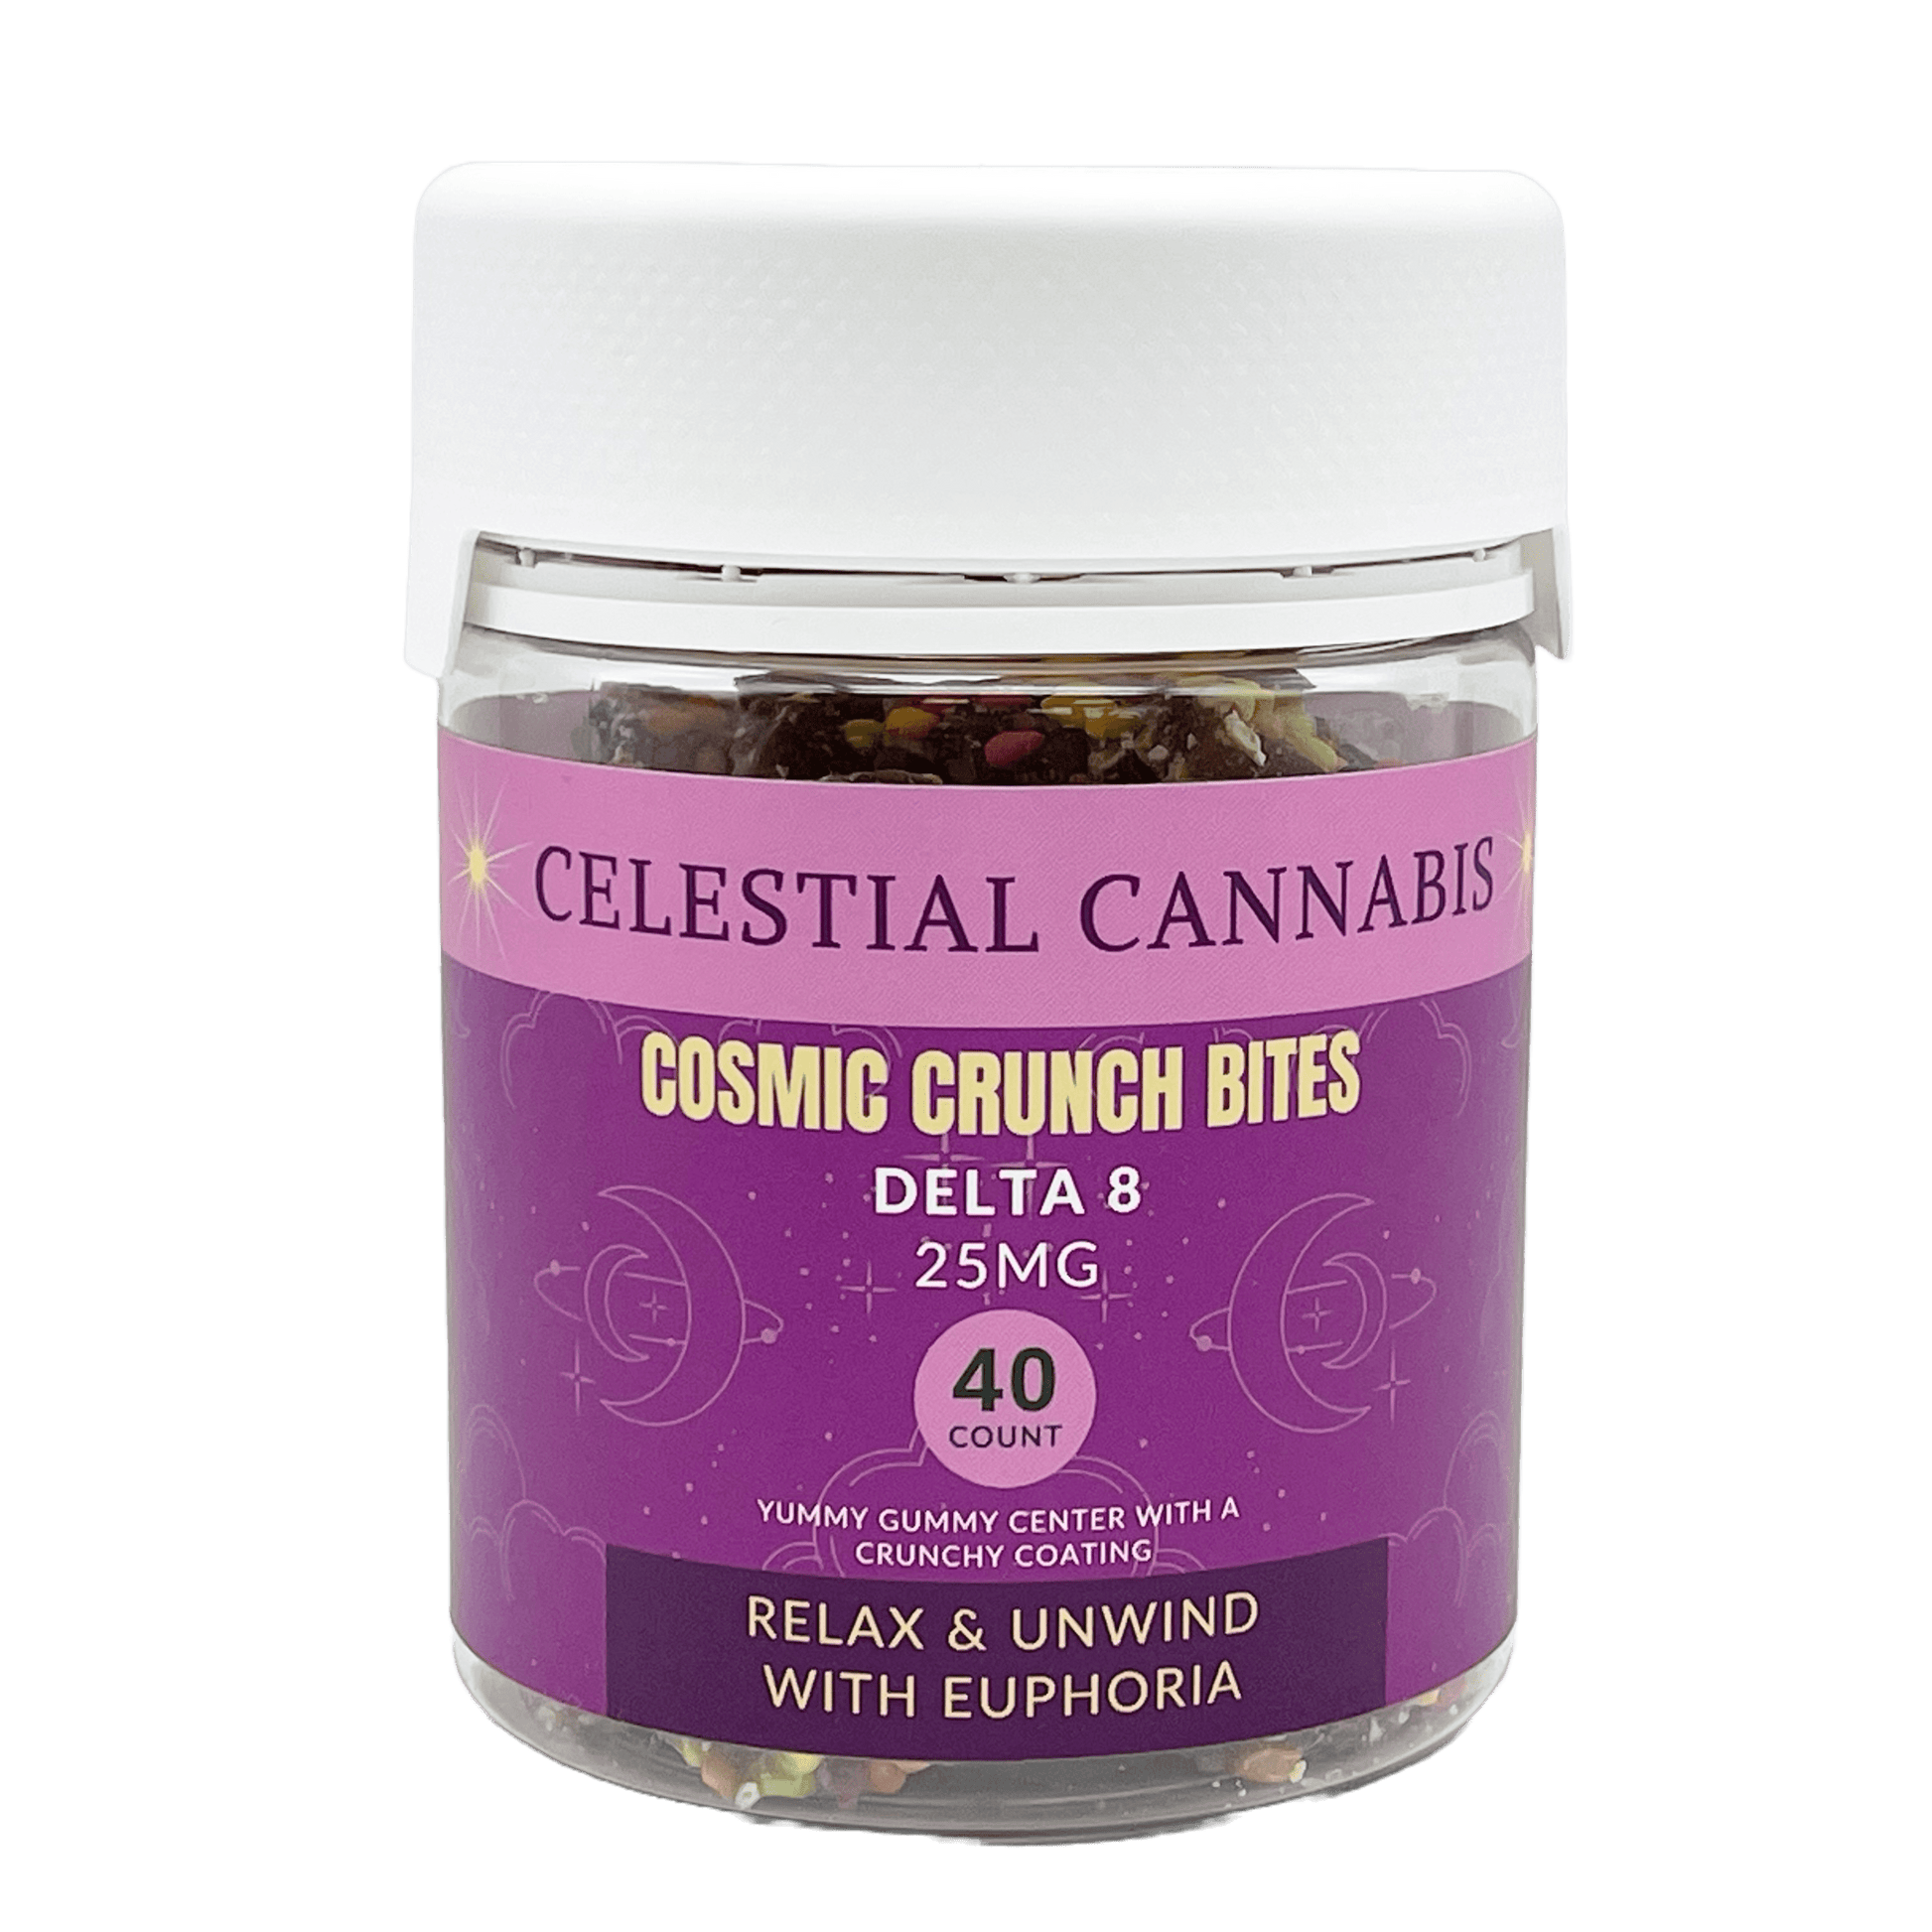 Celestial Cannabis Delta 8 Cosmic Crunch Bites 40ct